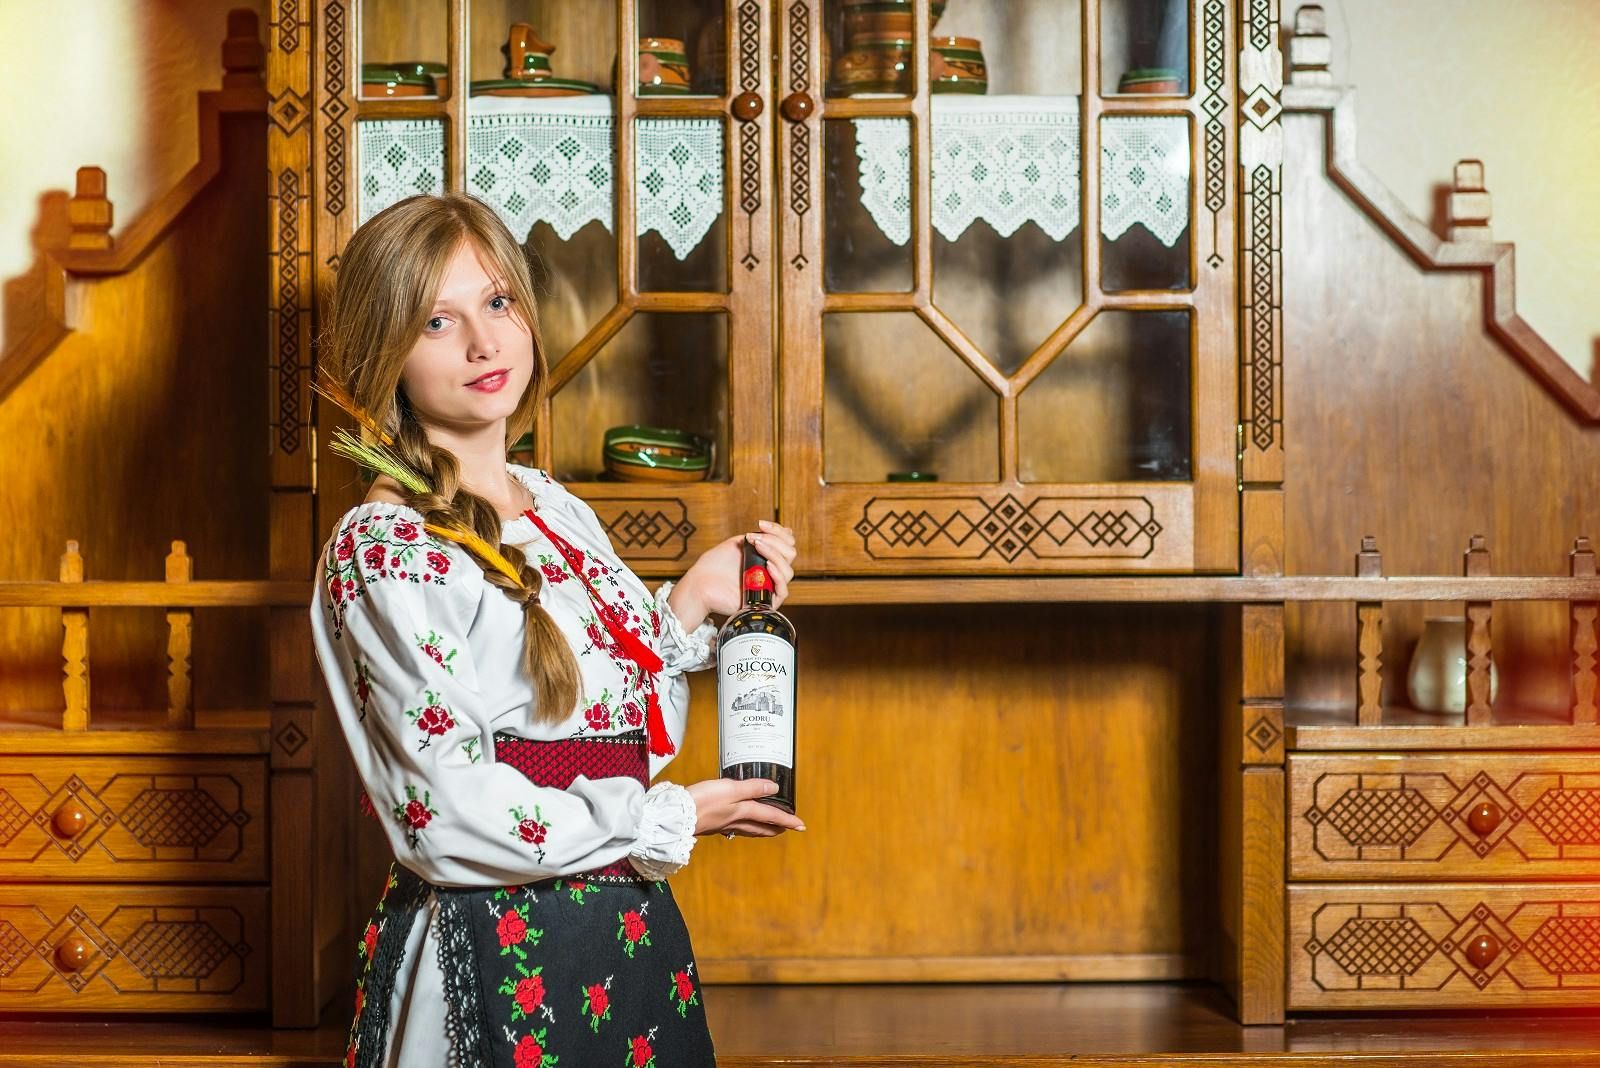 Imagen del tour: Tour del vino Cricova desde Chisinau con degustación